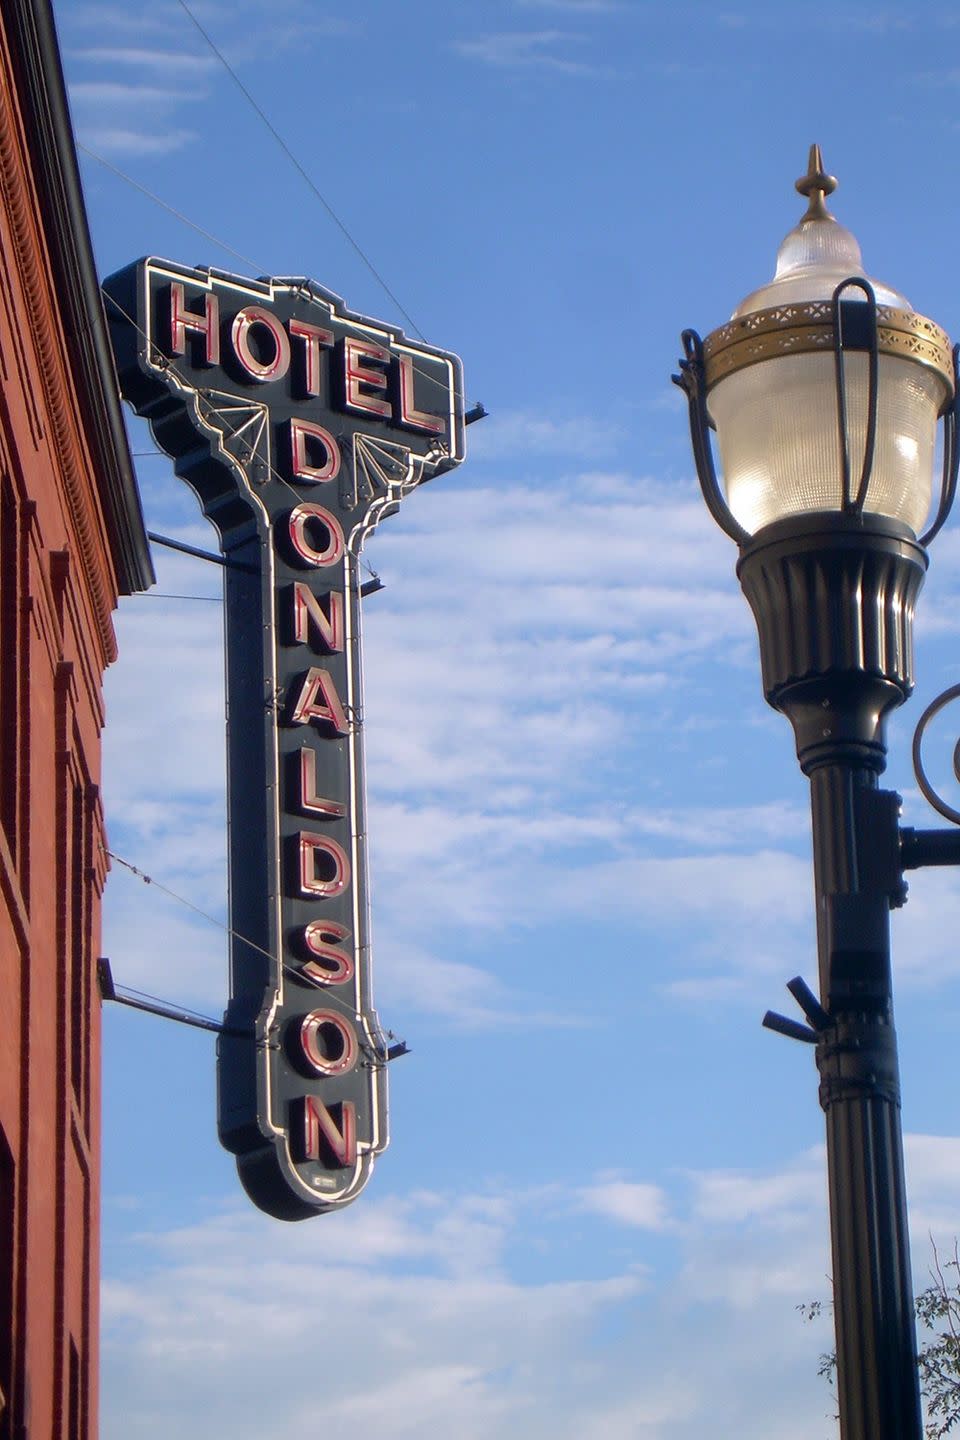 North Dakota: The Hotel Donaldson